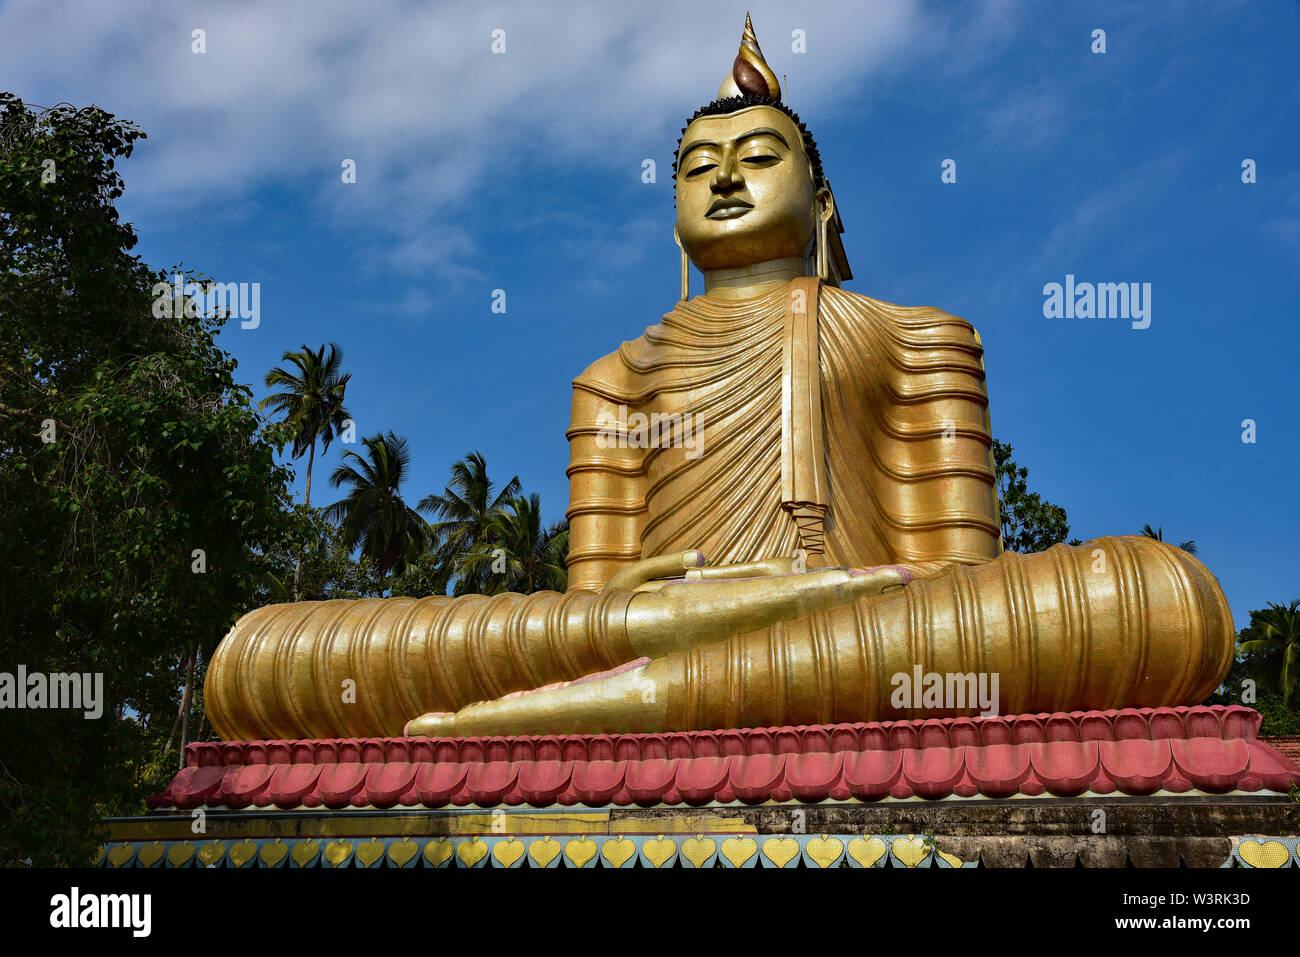 The colourful temple of Wewurukannala Vihara, 2 miles north of Dikwella, home to the largest seated golden Buddha in Sri Lanka, Asia. Stock Photo